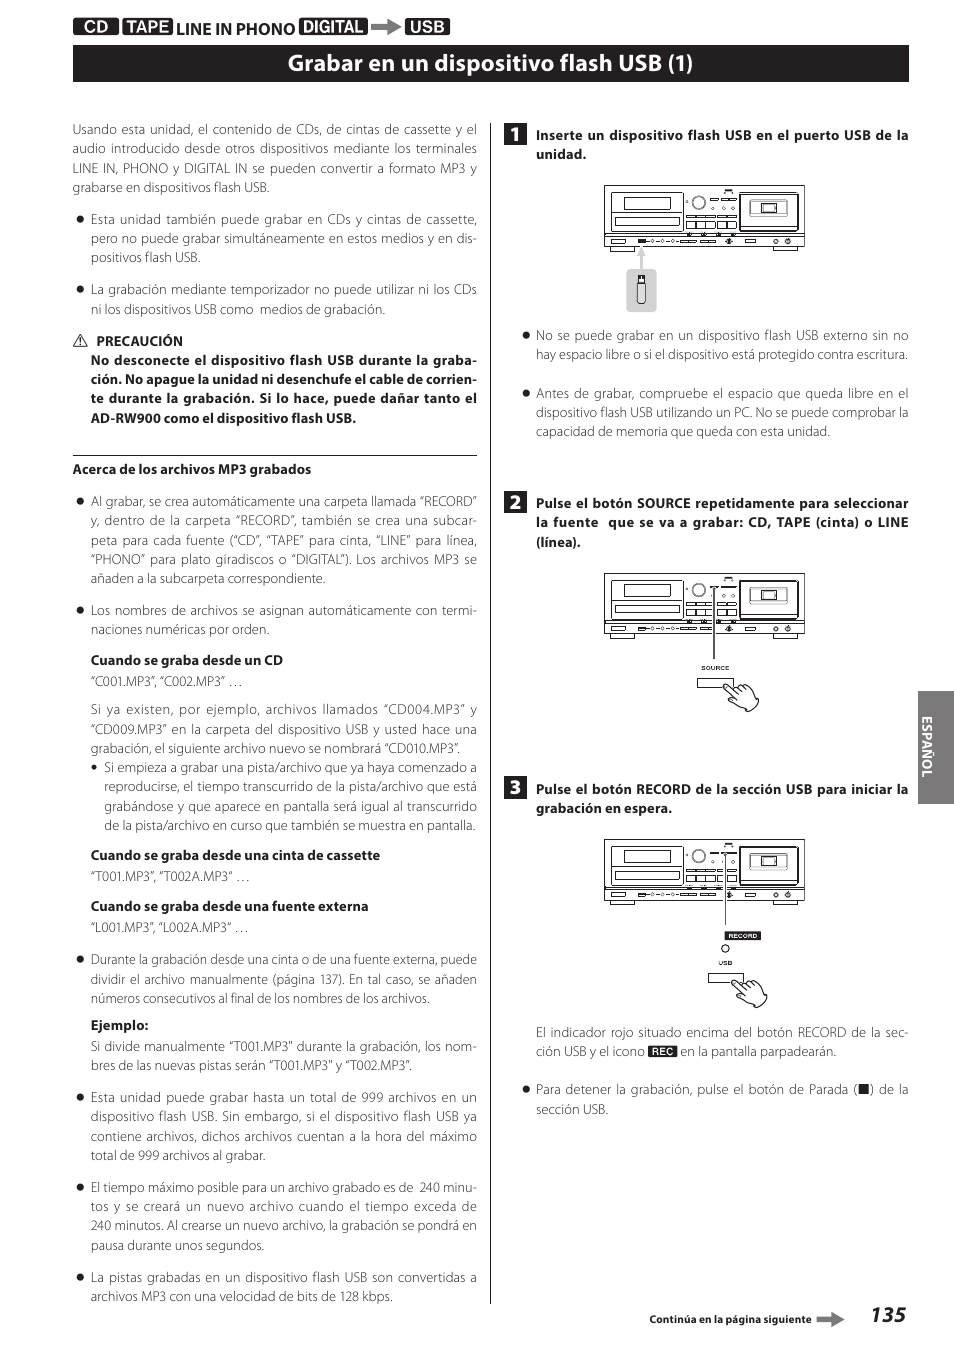 Grabar en un dispositivo flash usb, Grabar en un dispositivo flash usb (1) | Teac AD-RW900-B User Manual | Page 135 / 148